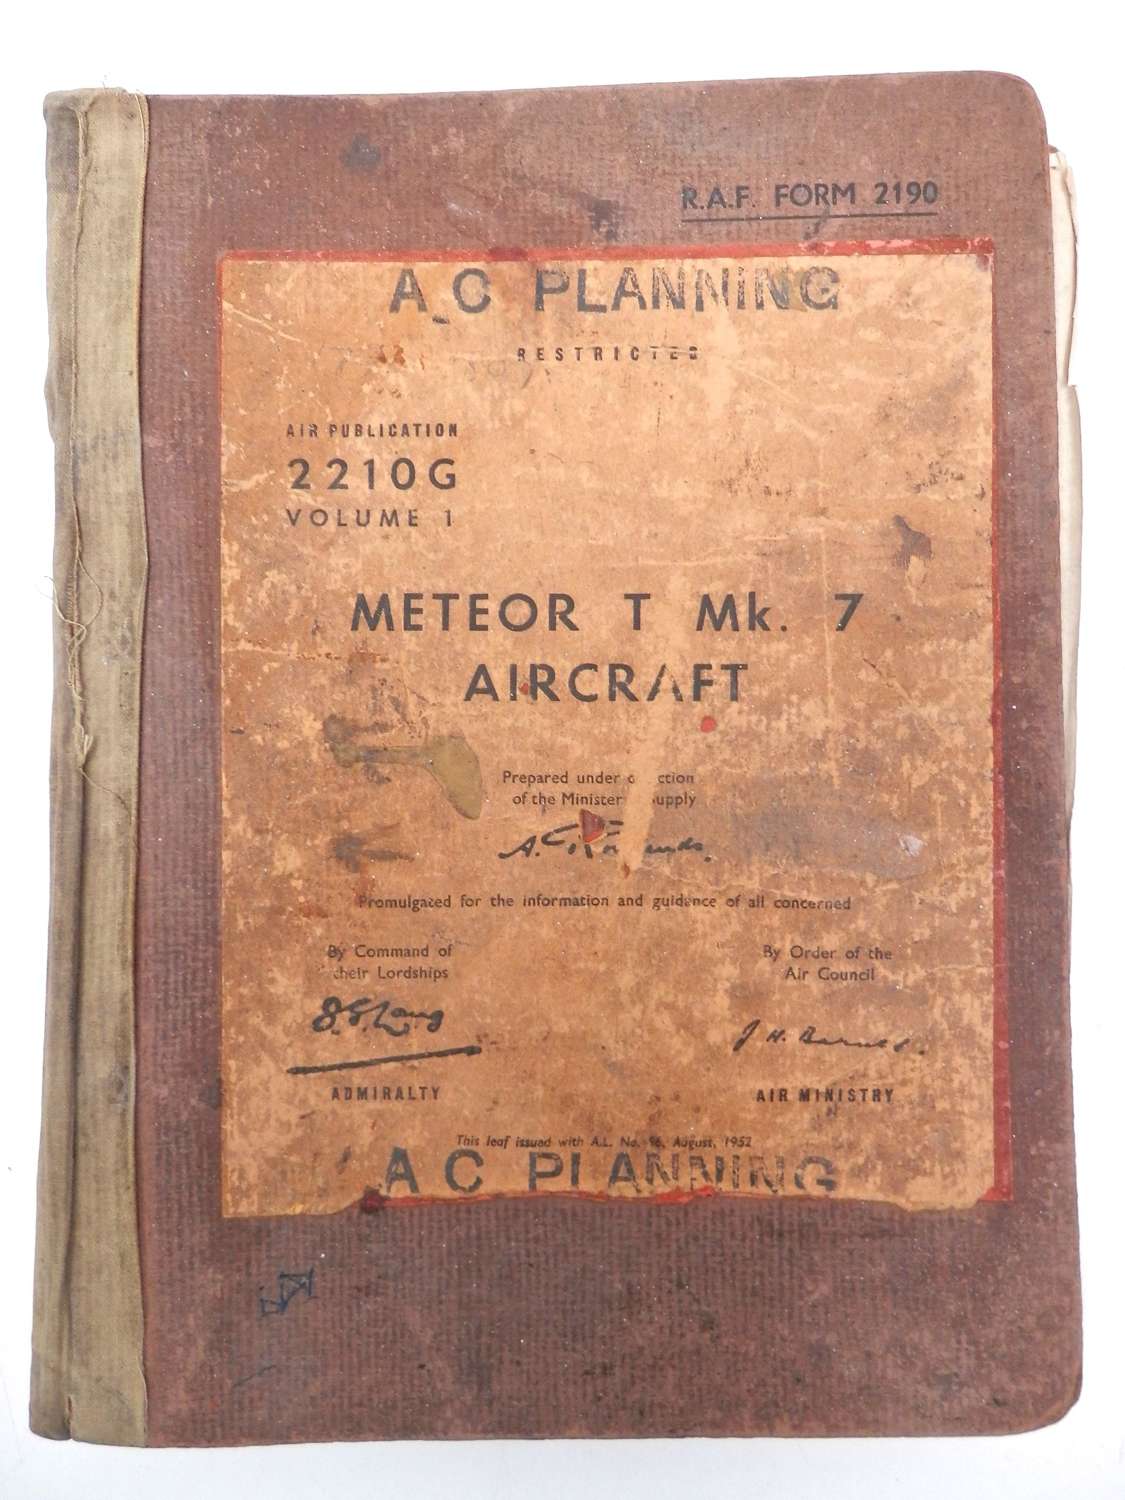 RAF Gloster meteor Mk7 aircraft manual